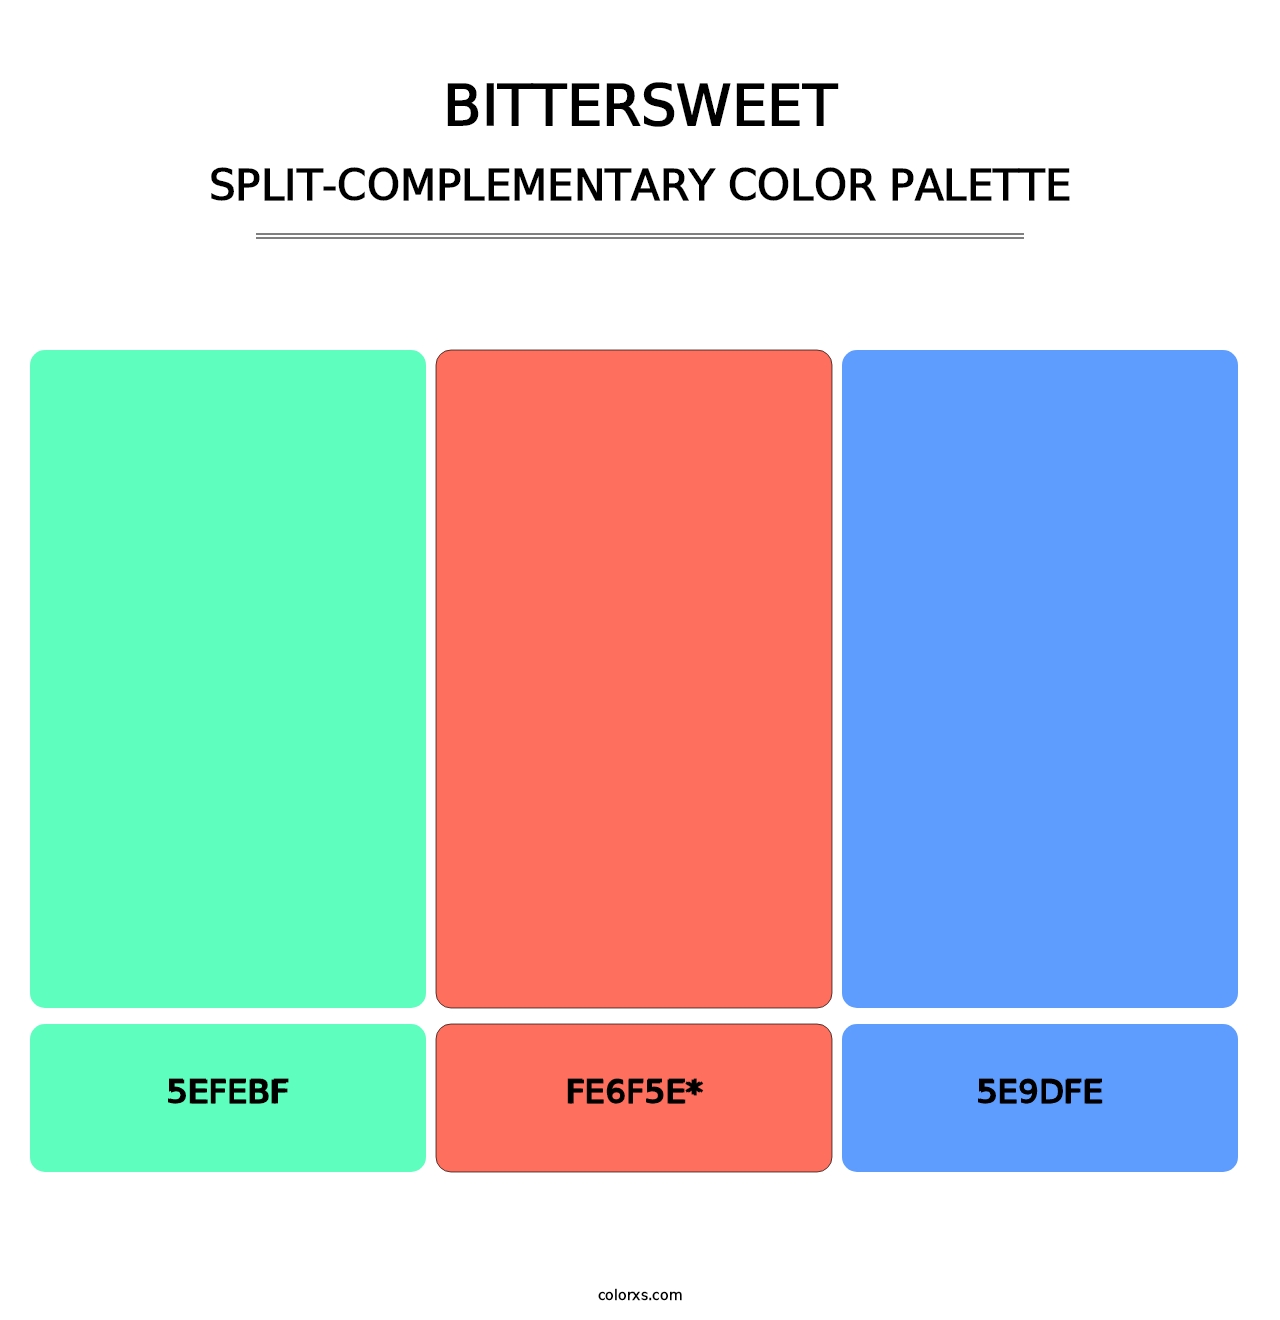 Bittersweet - Split-Complementary Color Palette